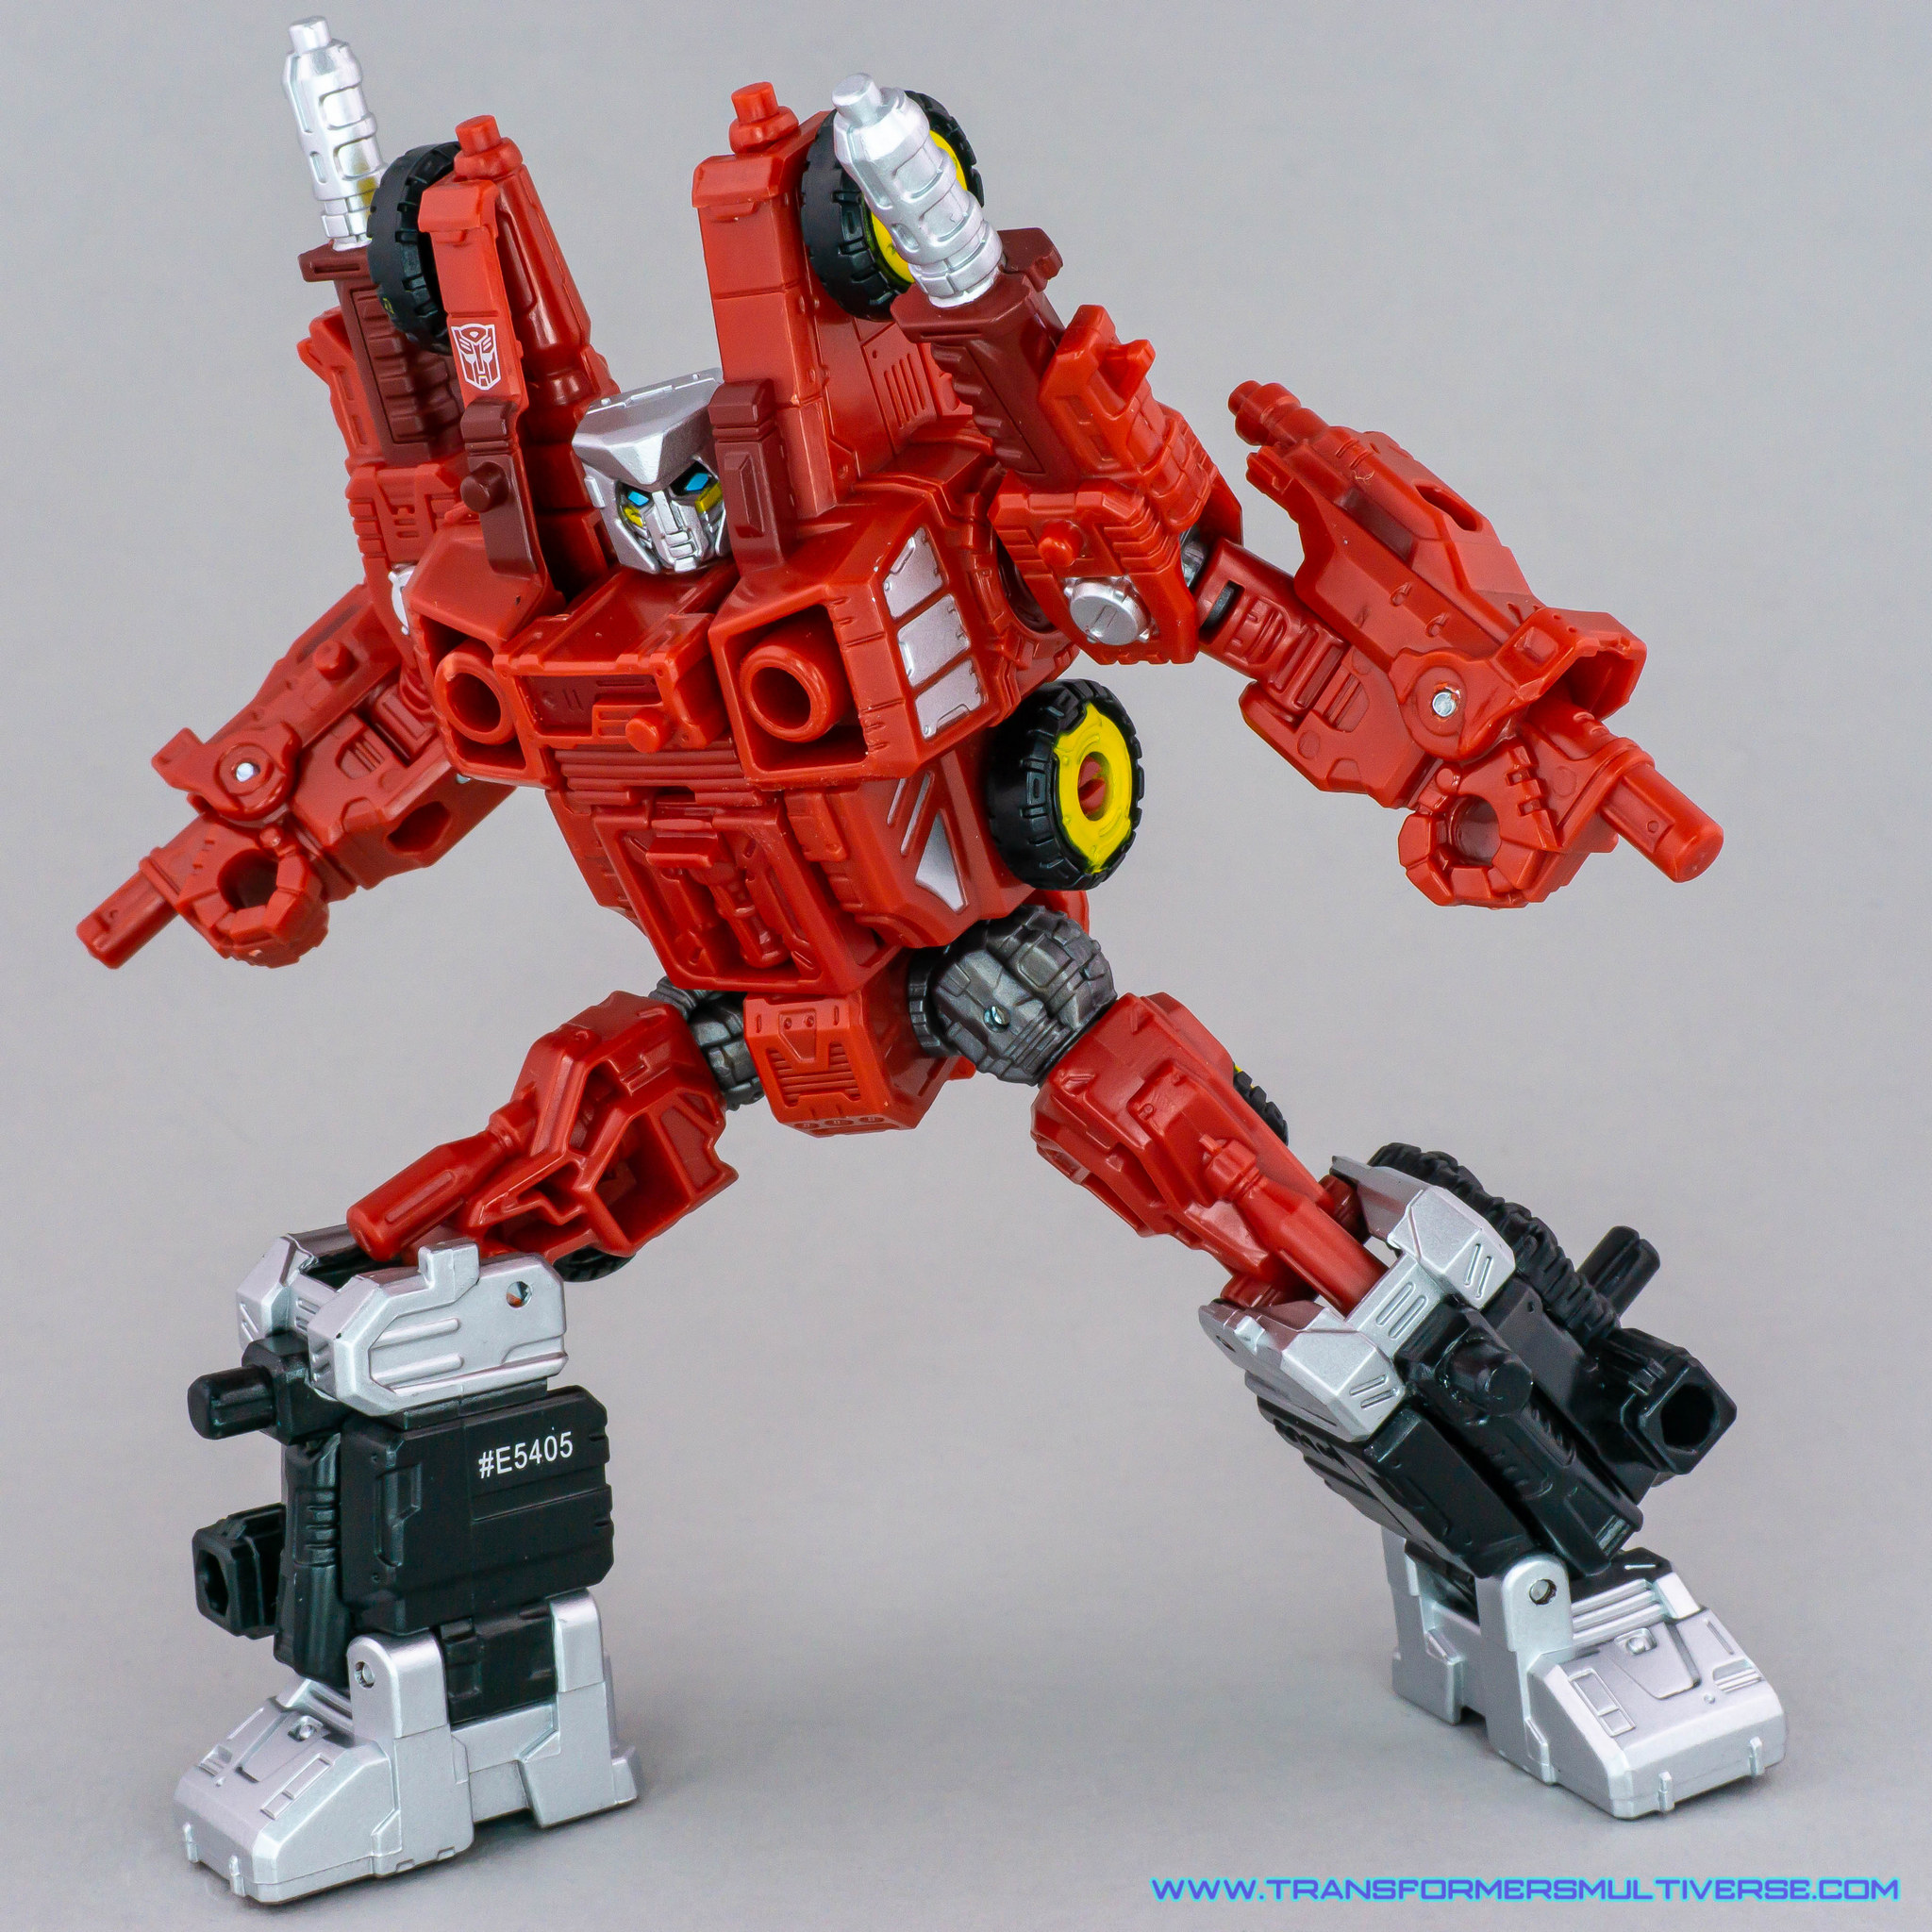 Transformers Siege Aragon robot mode posed